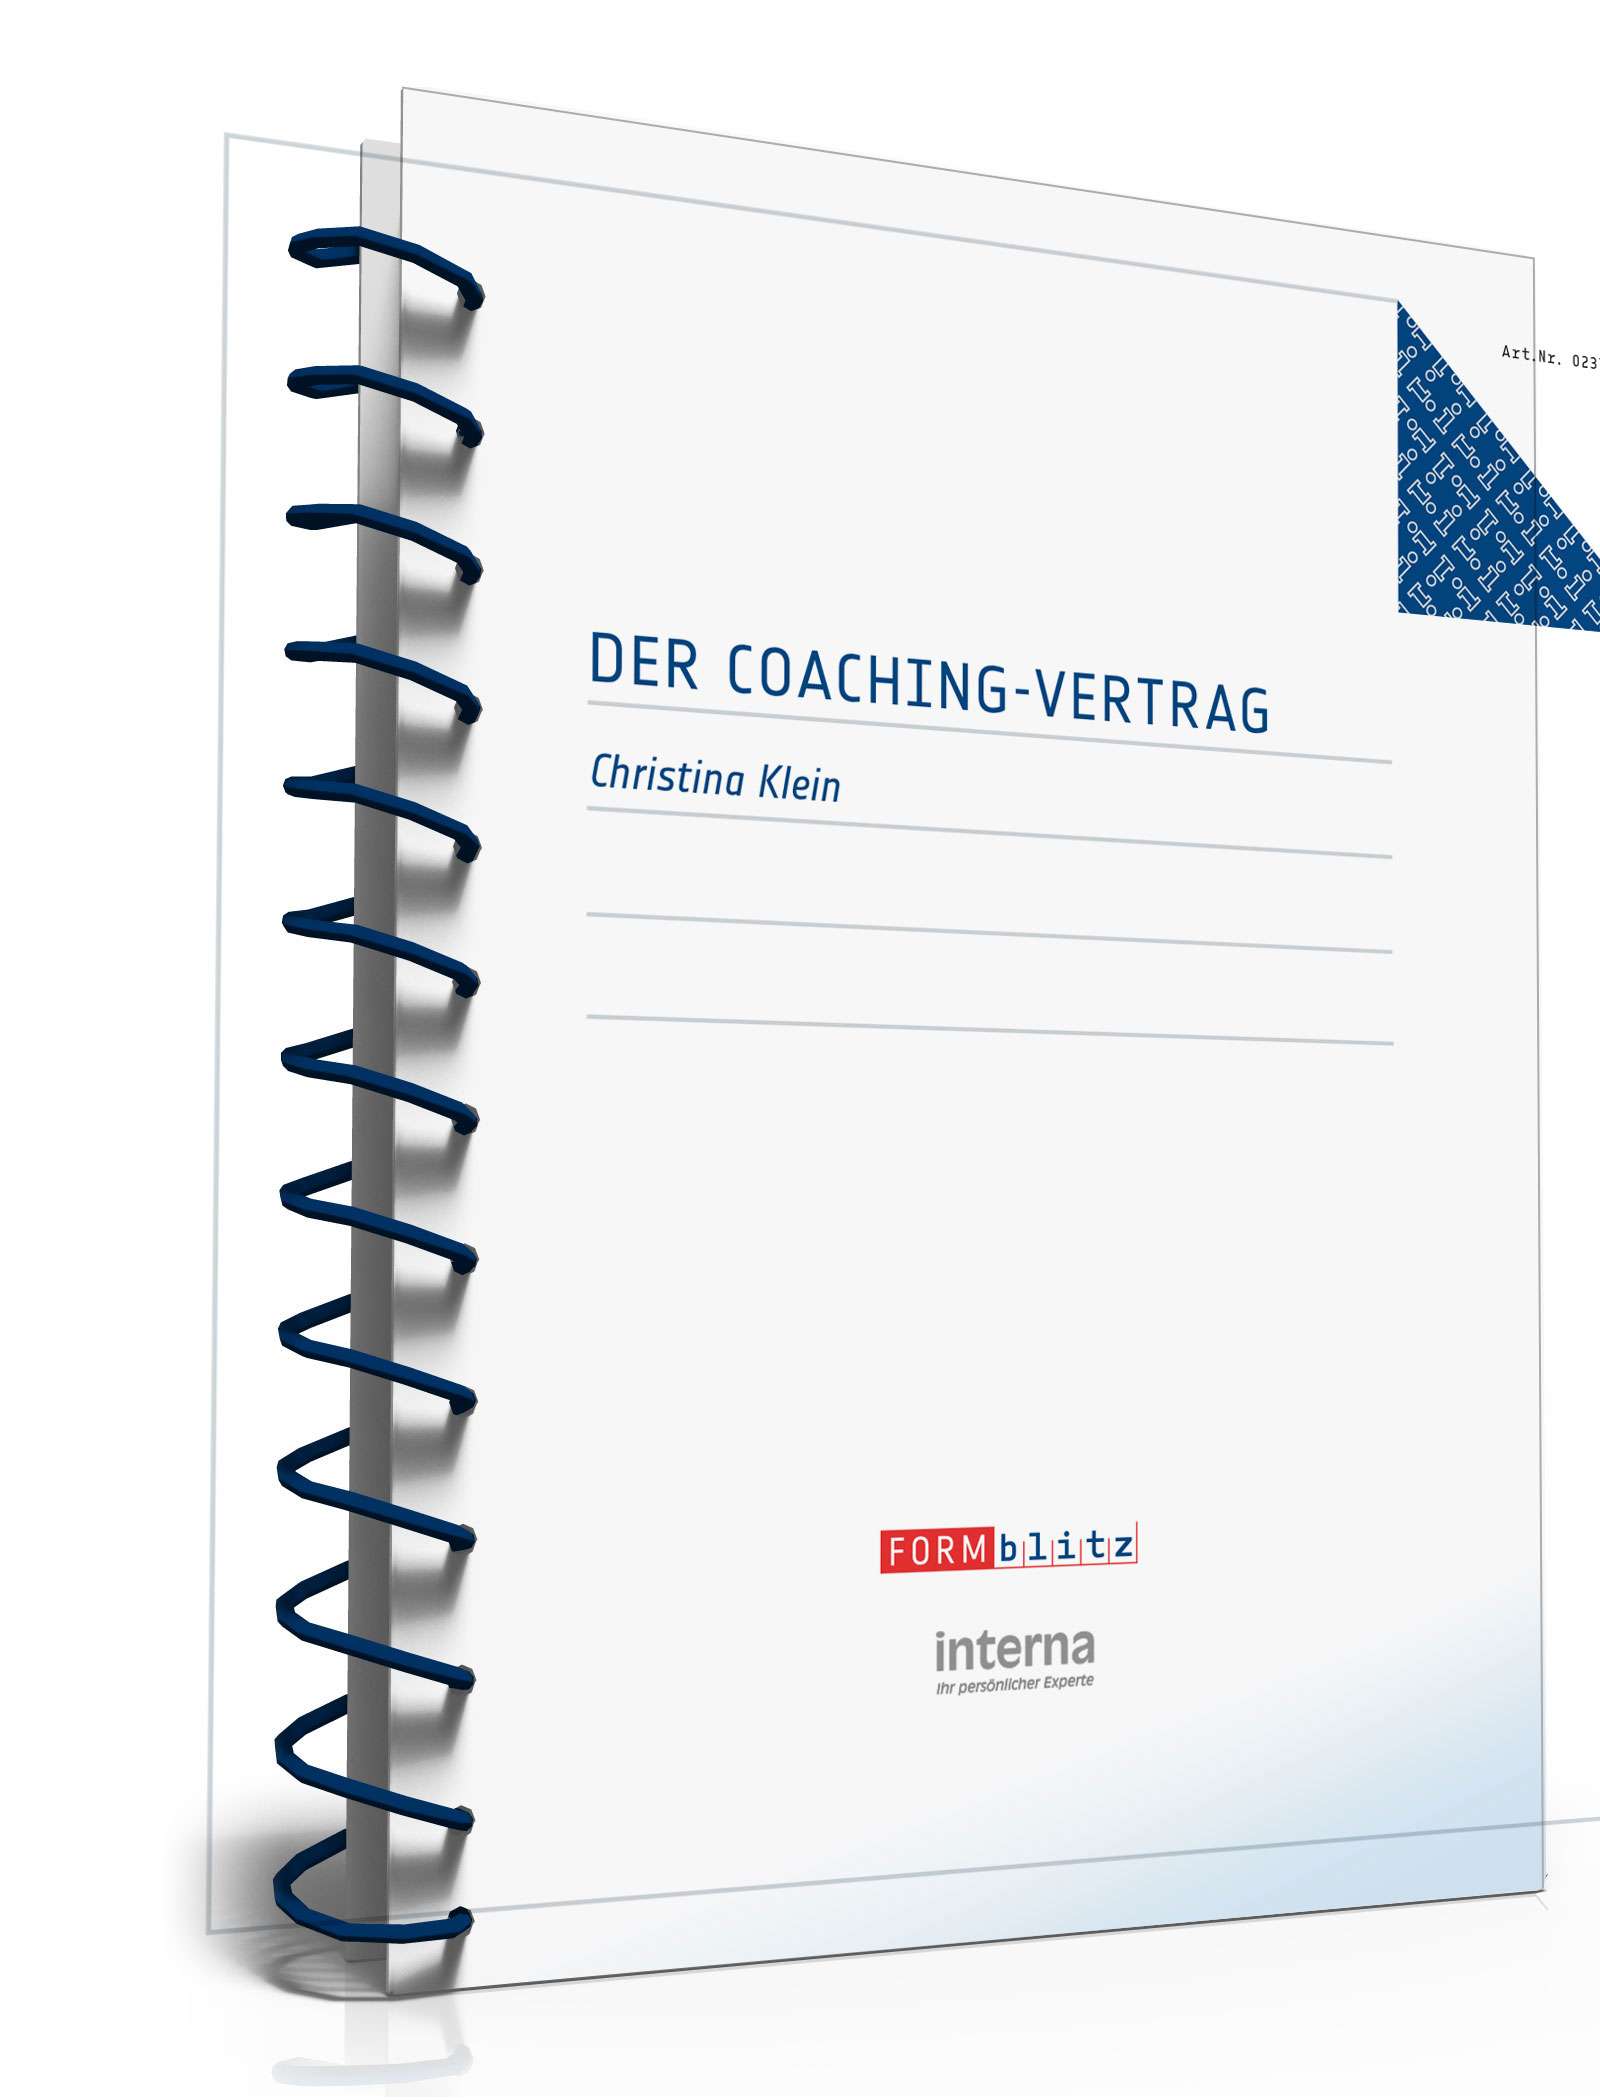 Hauptbild des Produkts: Der Coaching-Vertrag